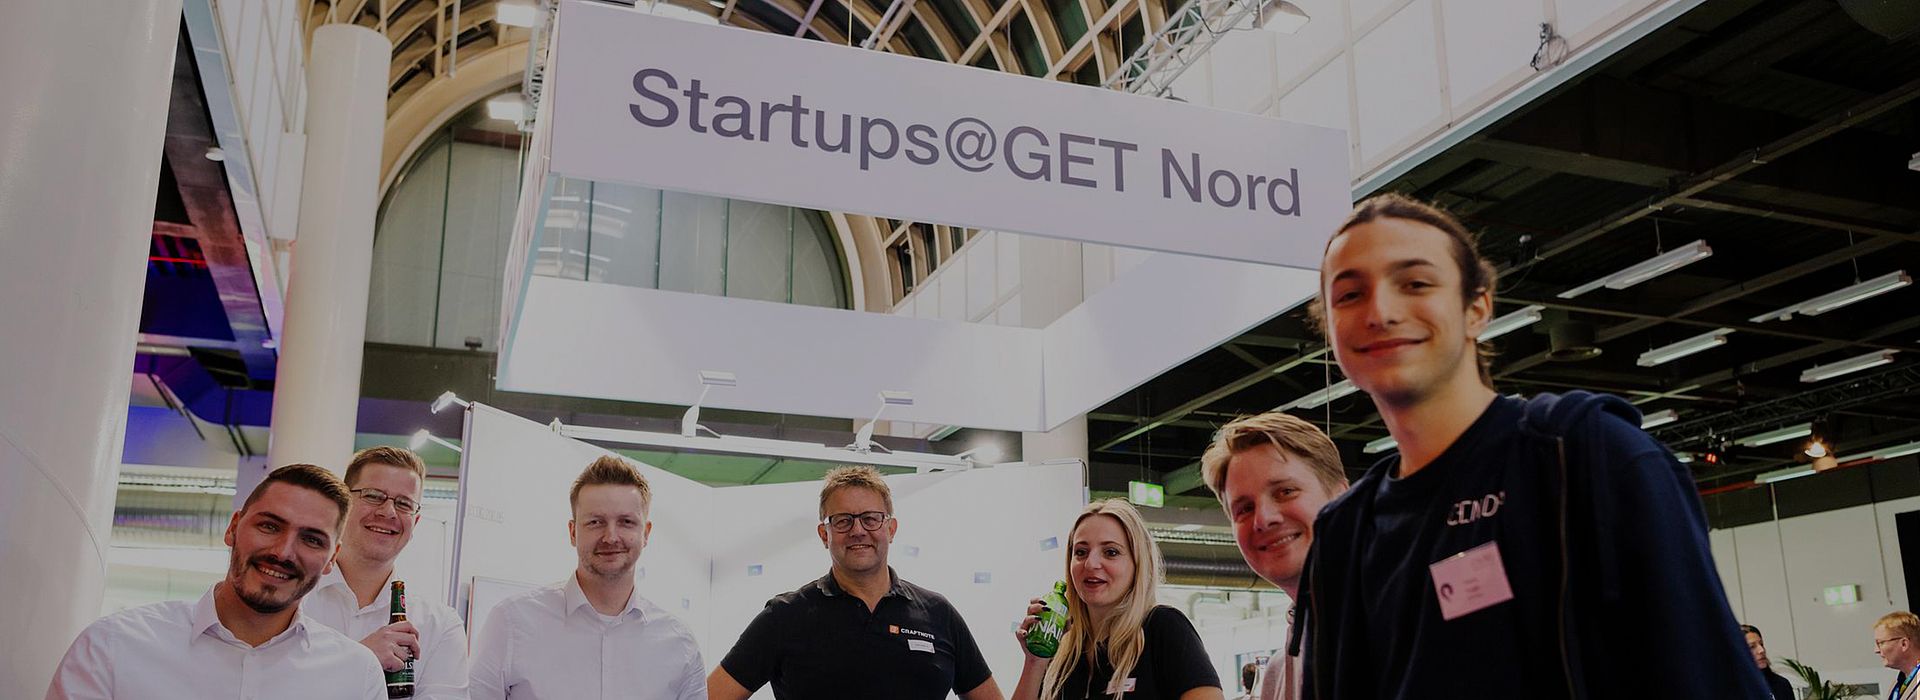 Startup@GET Nord